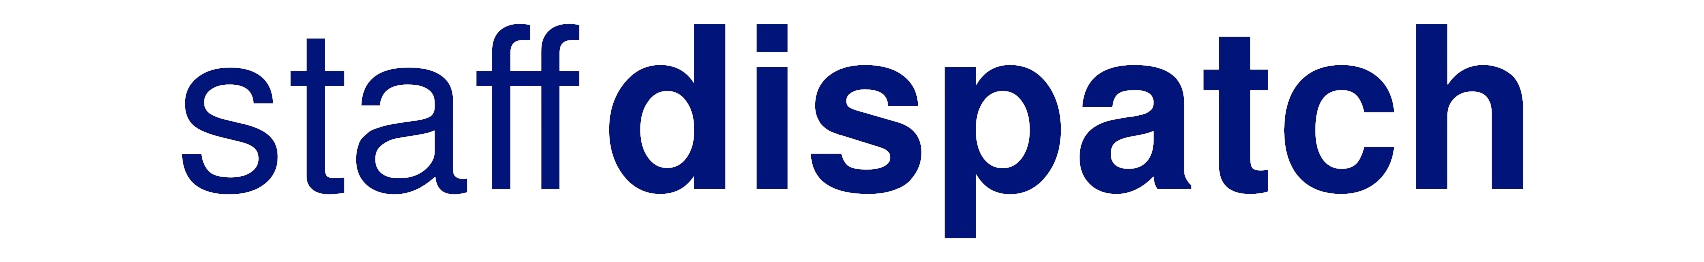 Staff Dispatch Logo